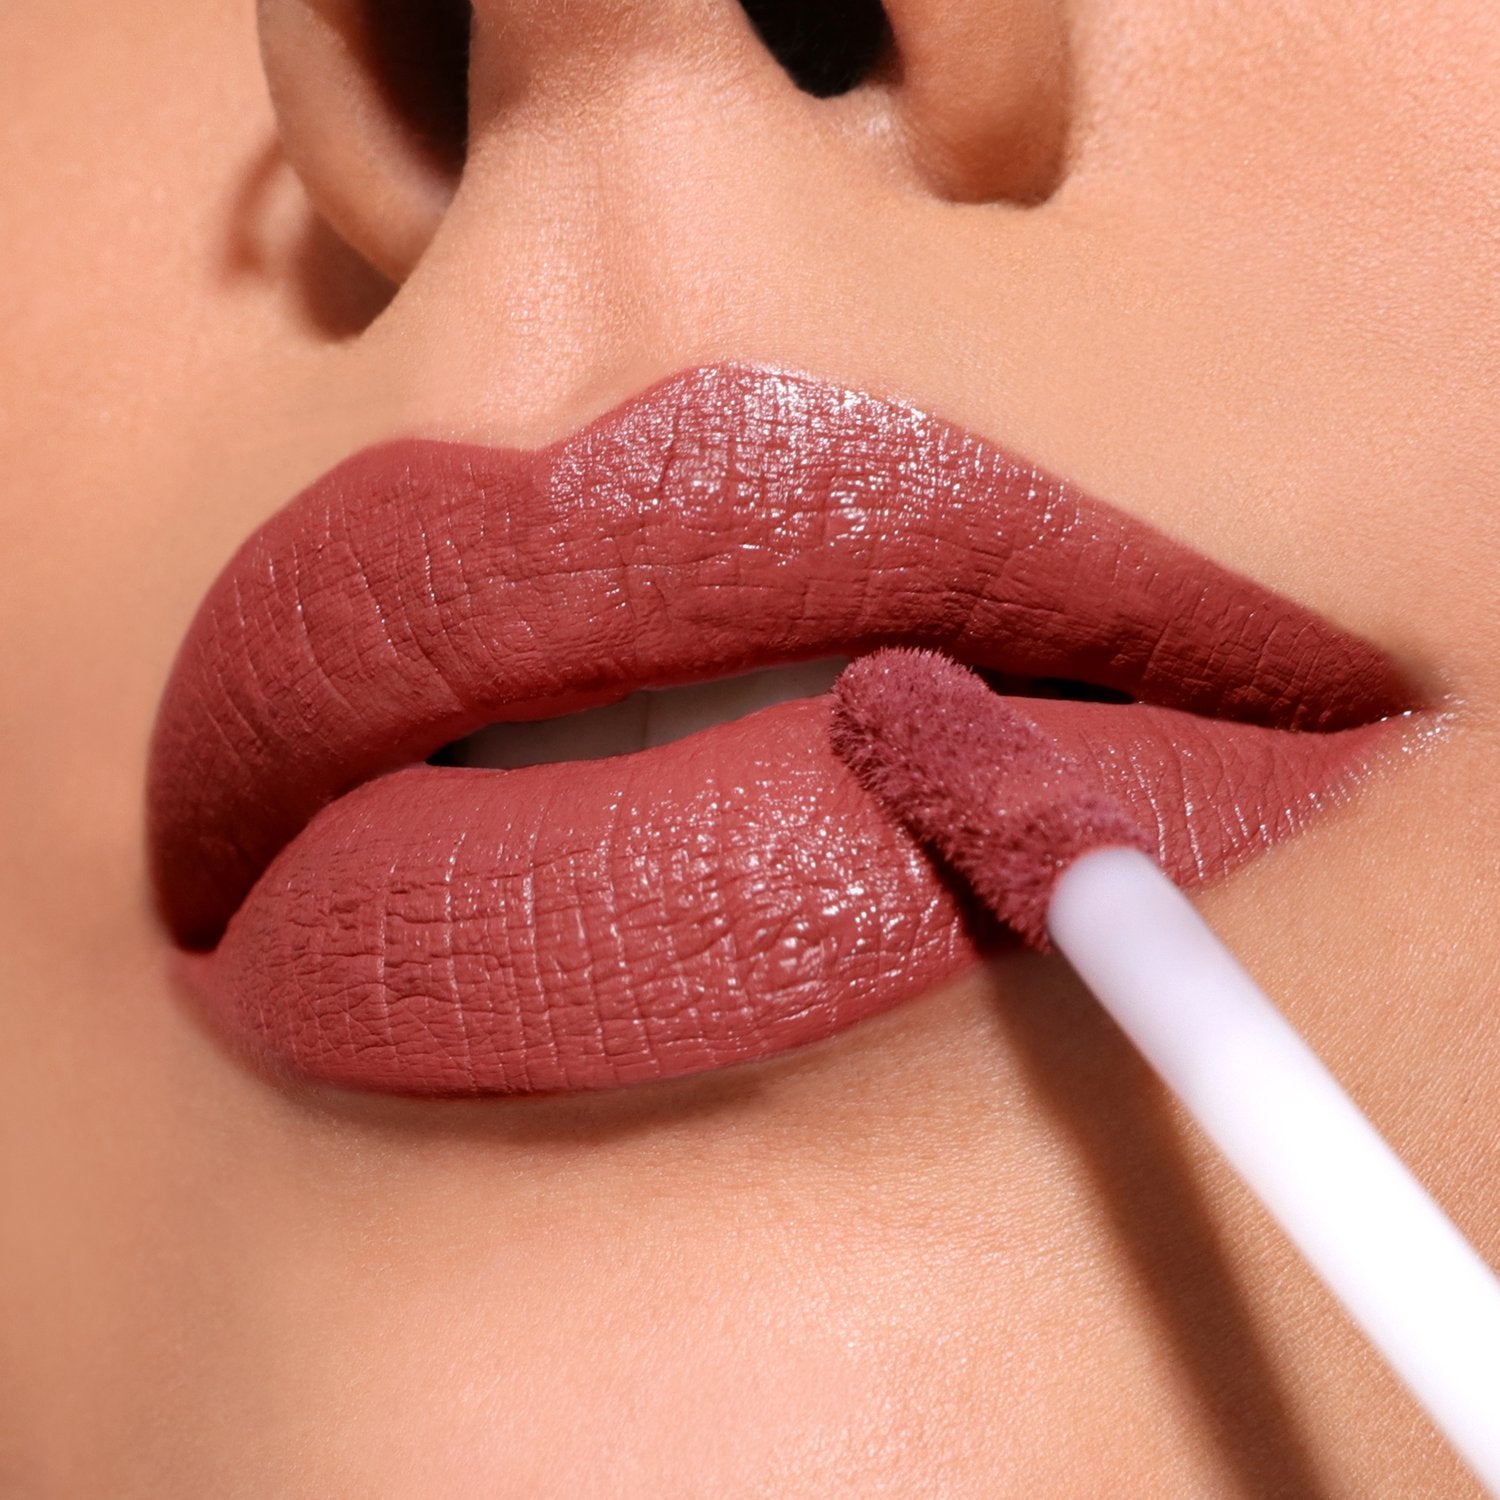 Moira Beauty - Lip Divine Liquid Lipstick A La Mode